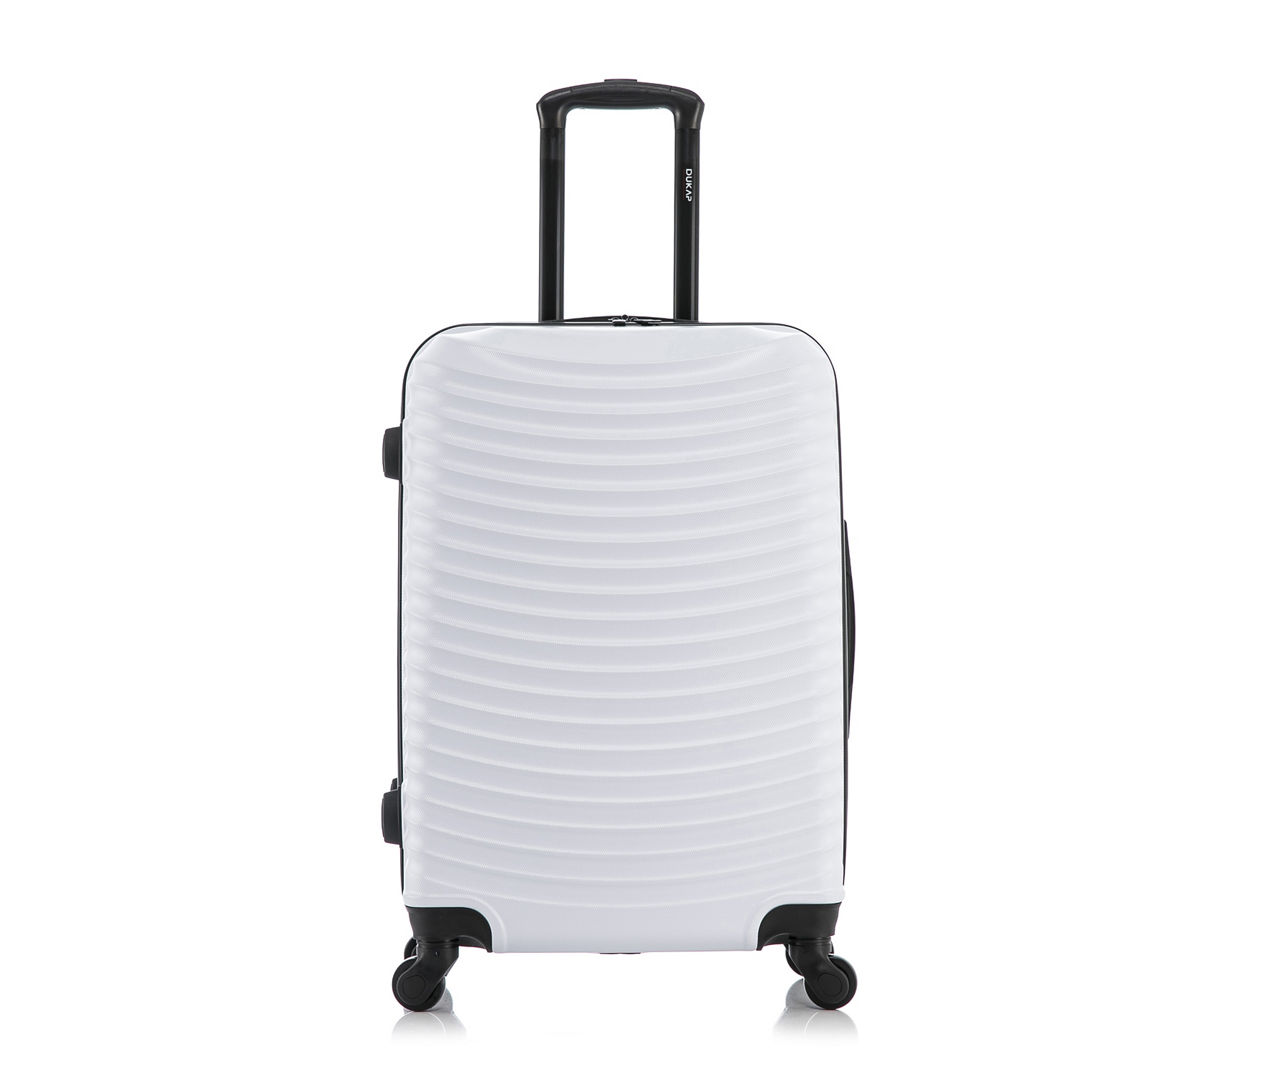 DUKAP Adly White 24" Curved-Ridge Hardside Spinner Suitcase